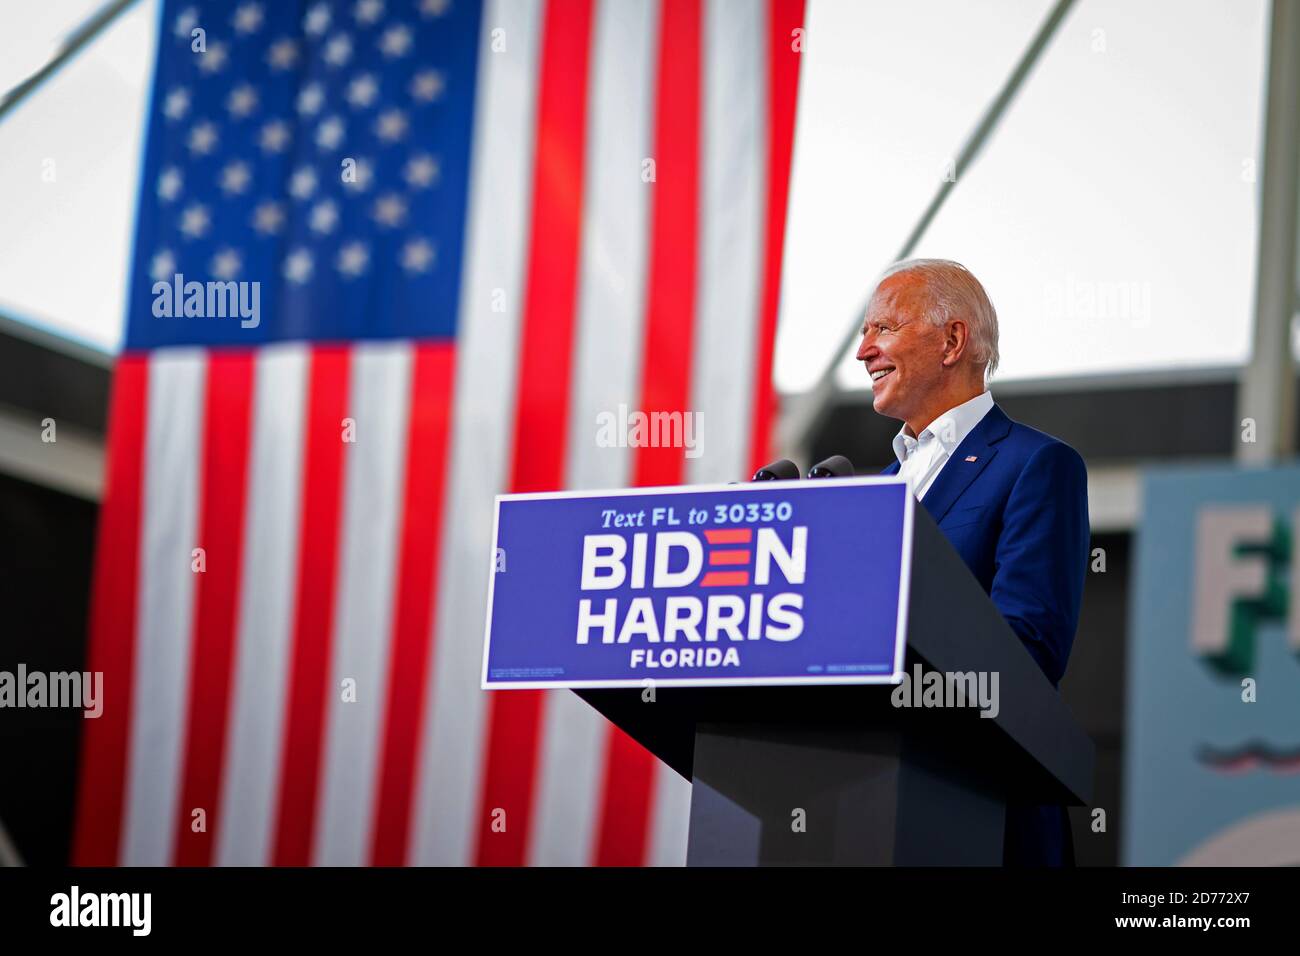 MIRAMAR, FL, USA - 13 ottobre 2020 - il candidato presidenziale americano Joe Biden al Drive-in GOTV Rally al Miramar Regional Park - Miramar, Florida, USA - Foto Stock